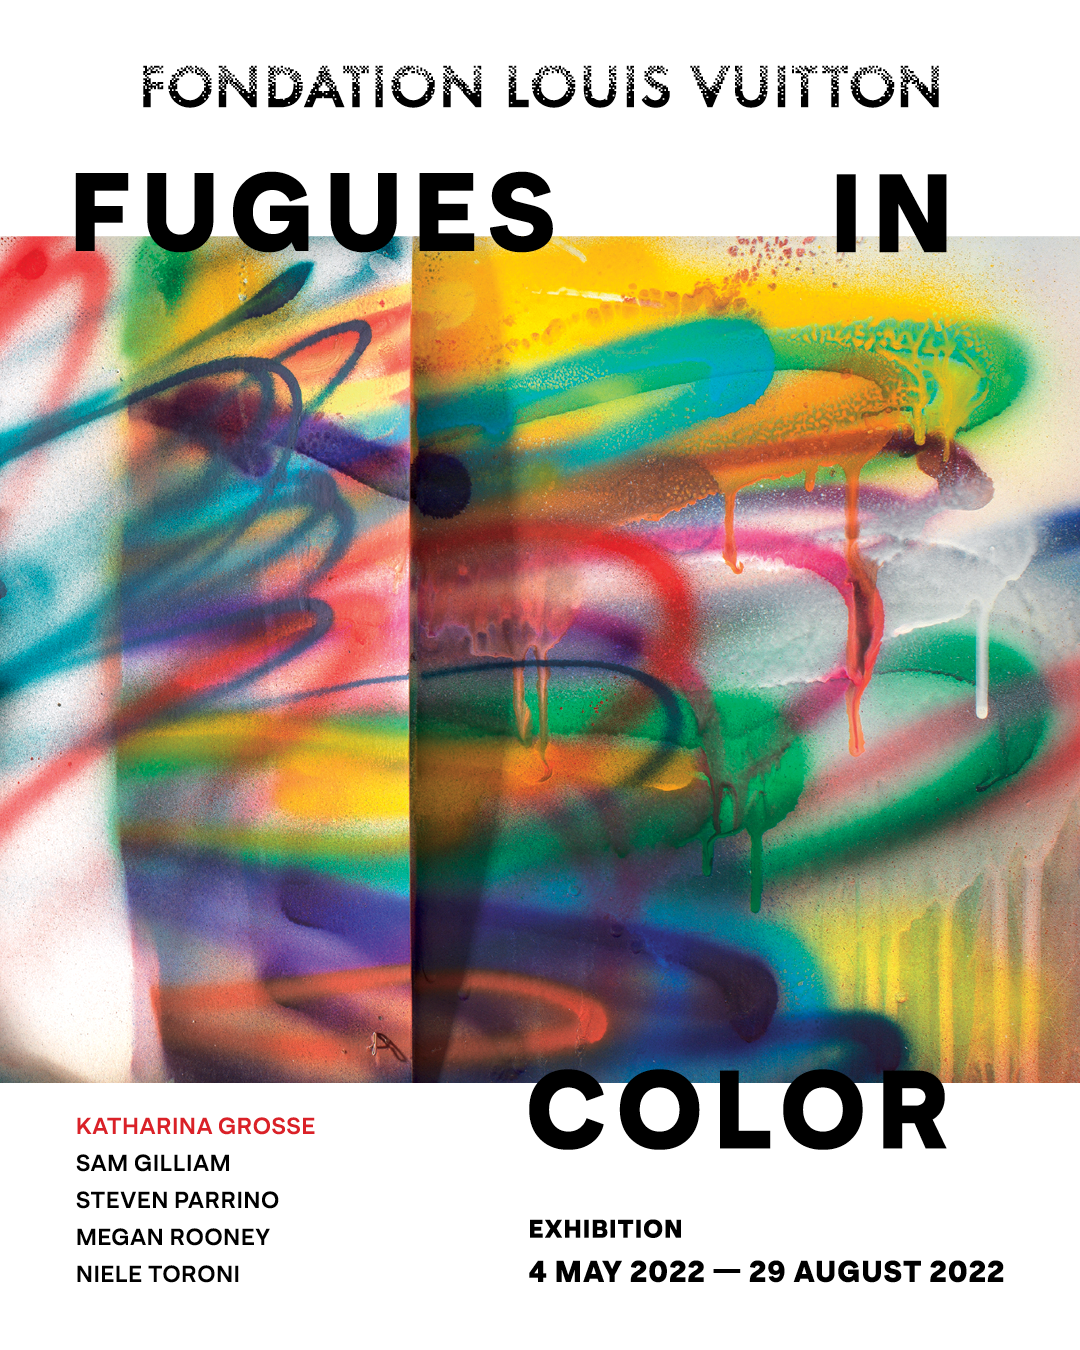 Fondation Louis Vuitton, exhibition Fugues in Color_EXHIB POSTER_EN